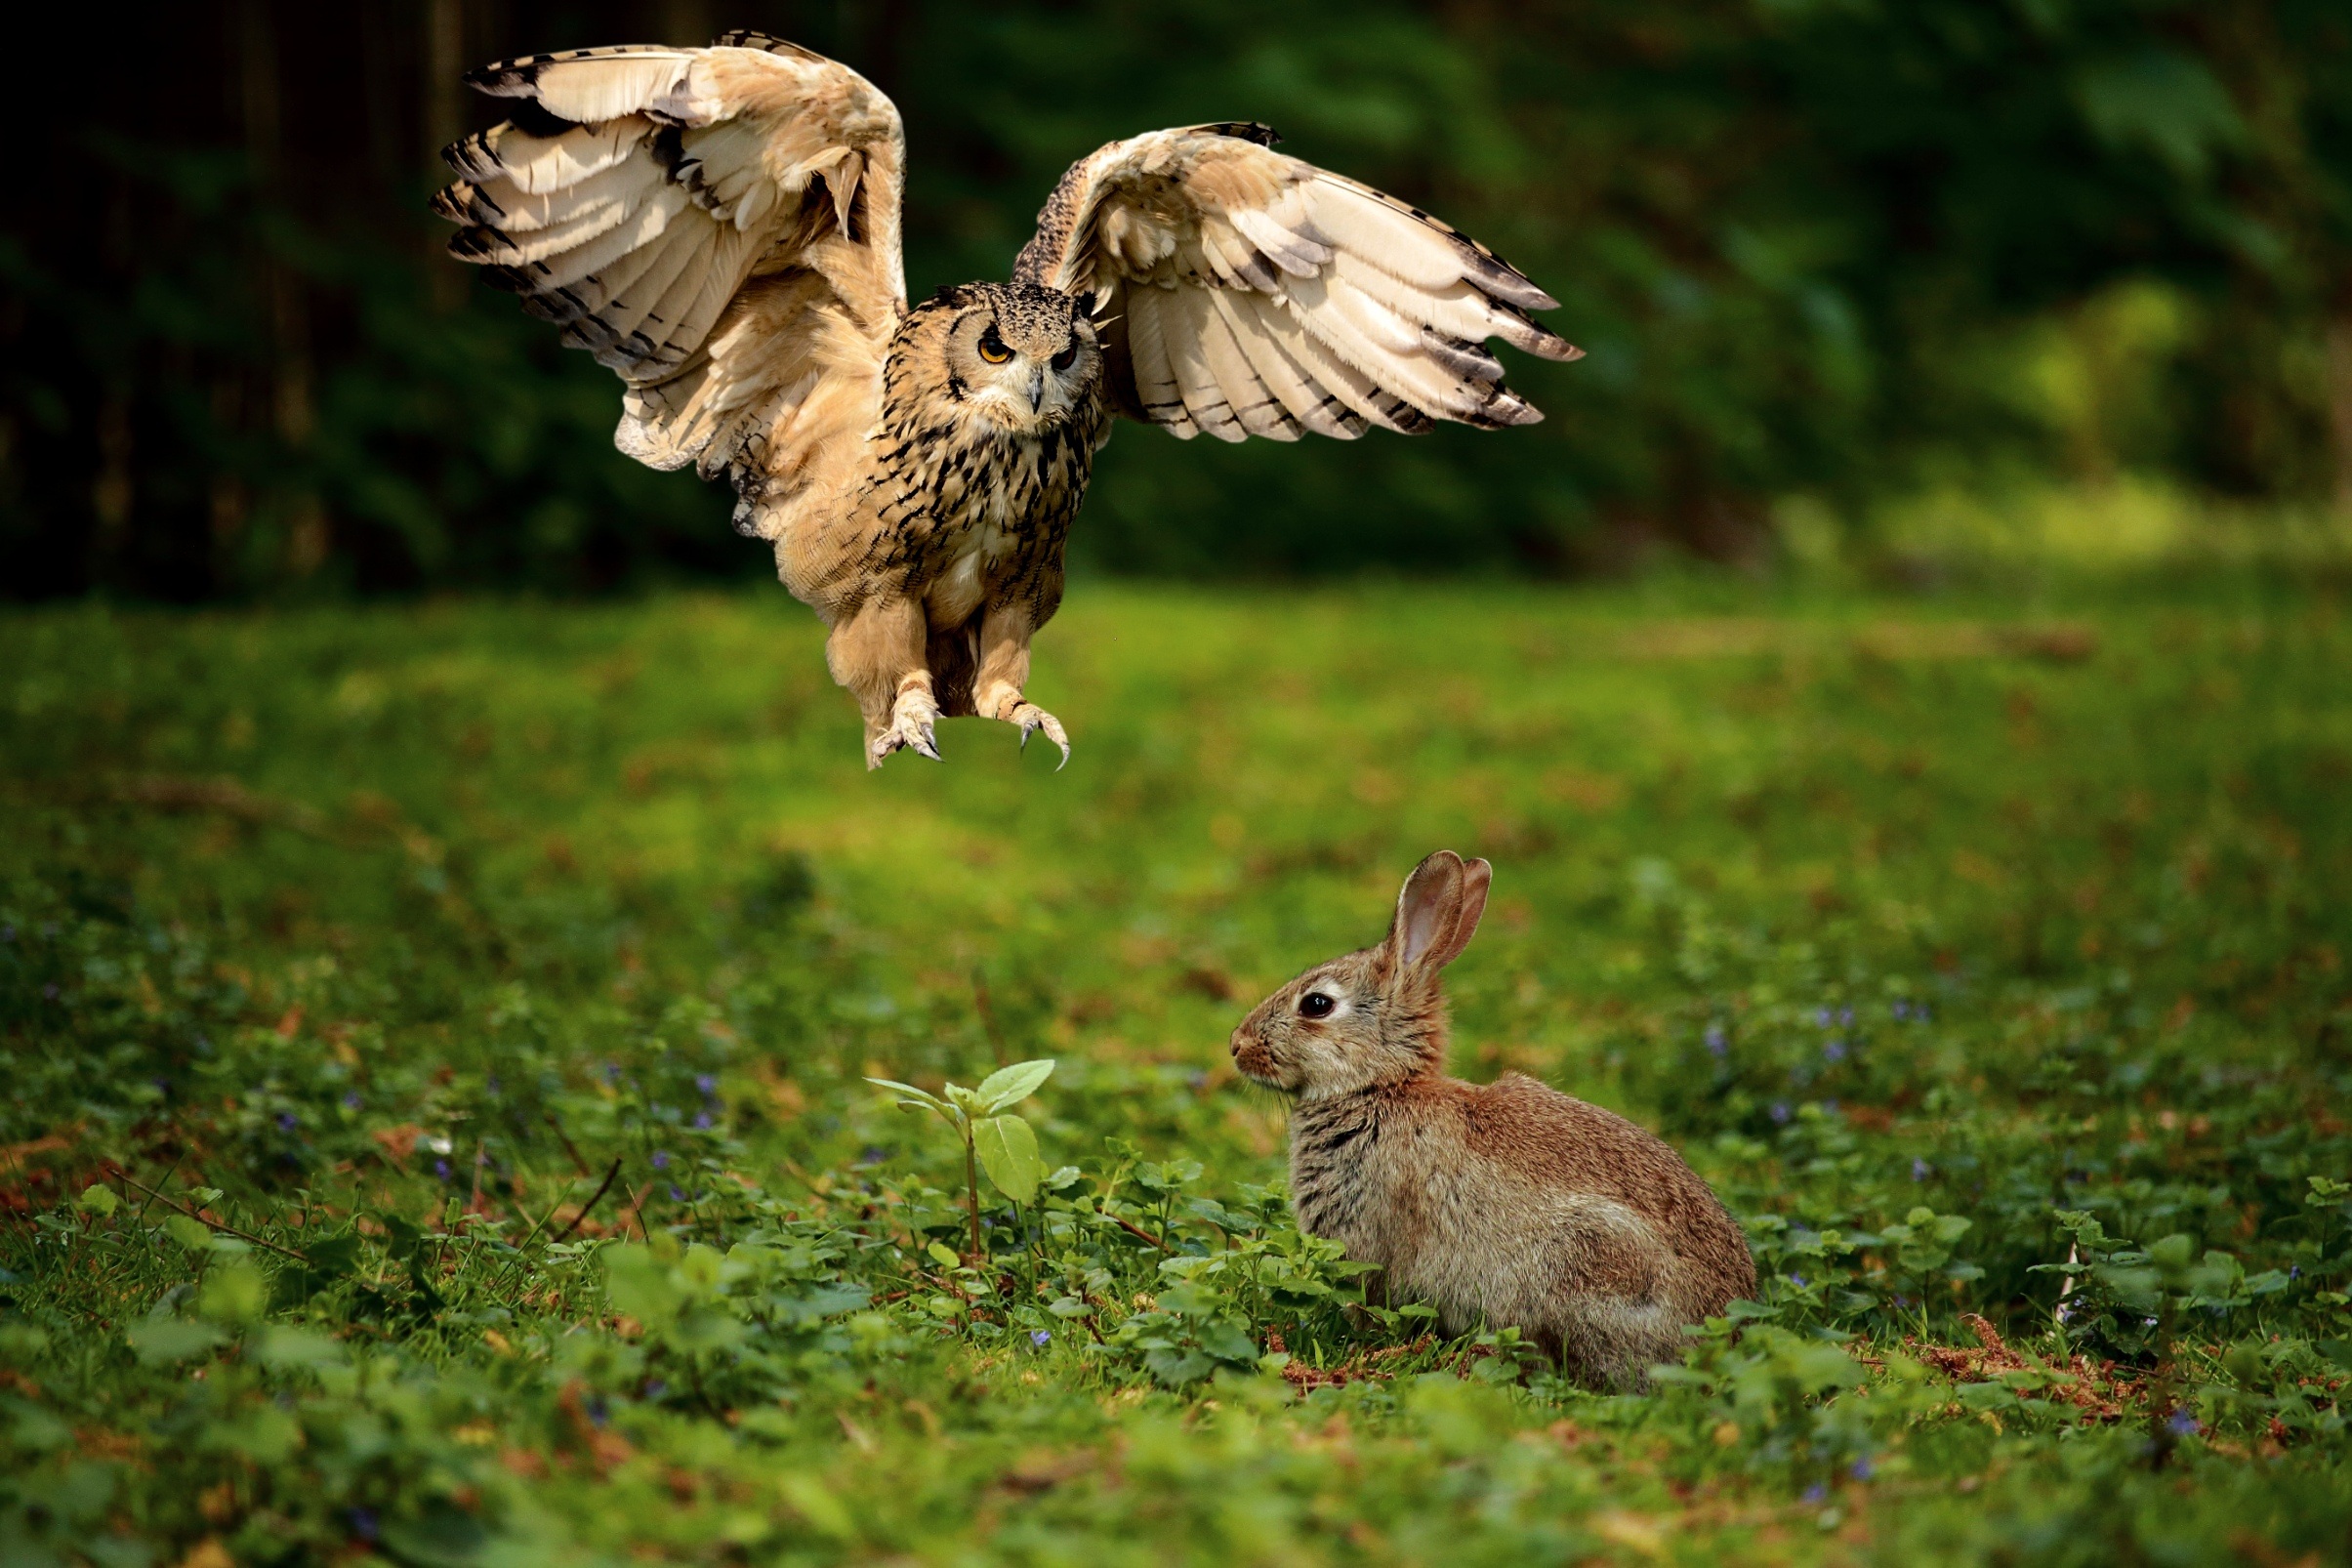 Owl Hunting a Rabbit by Capri23auto